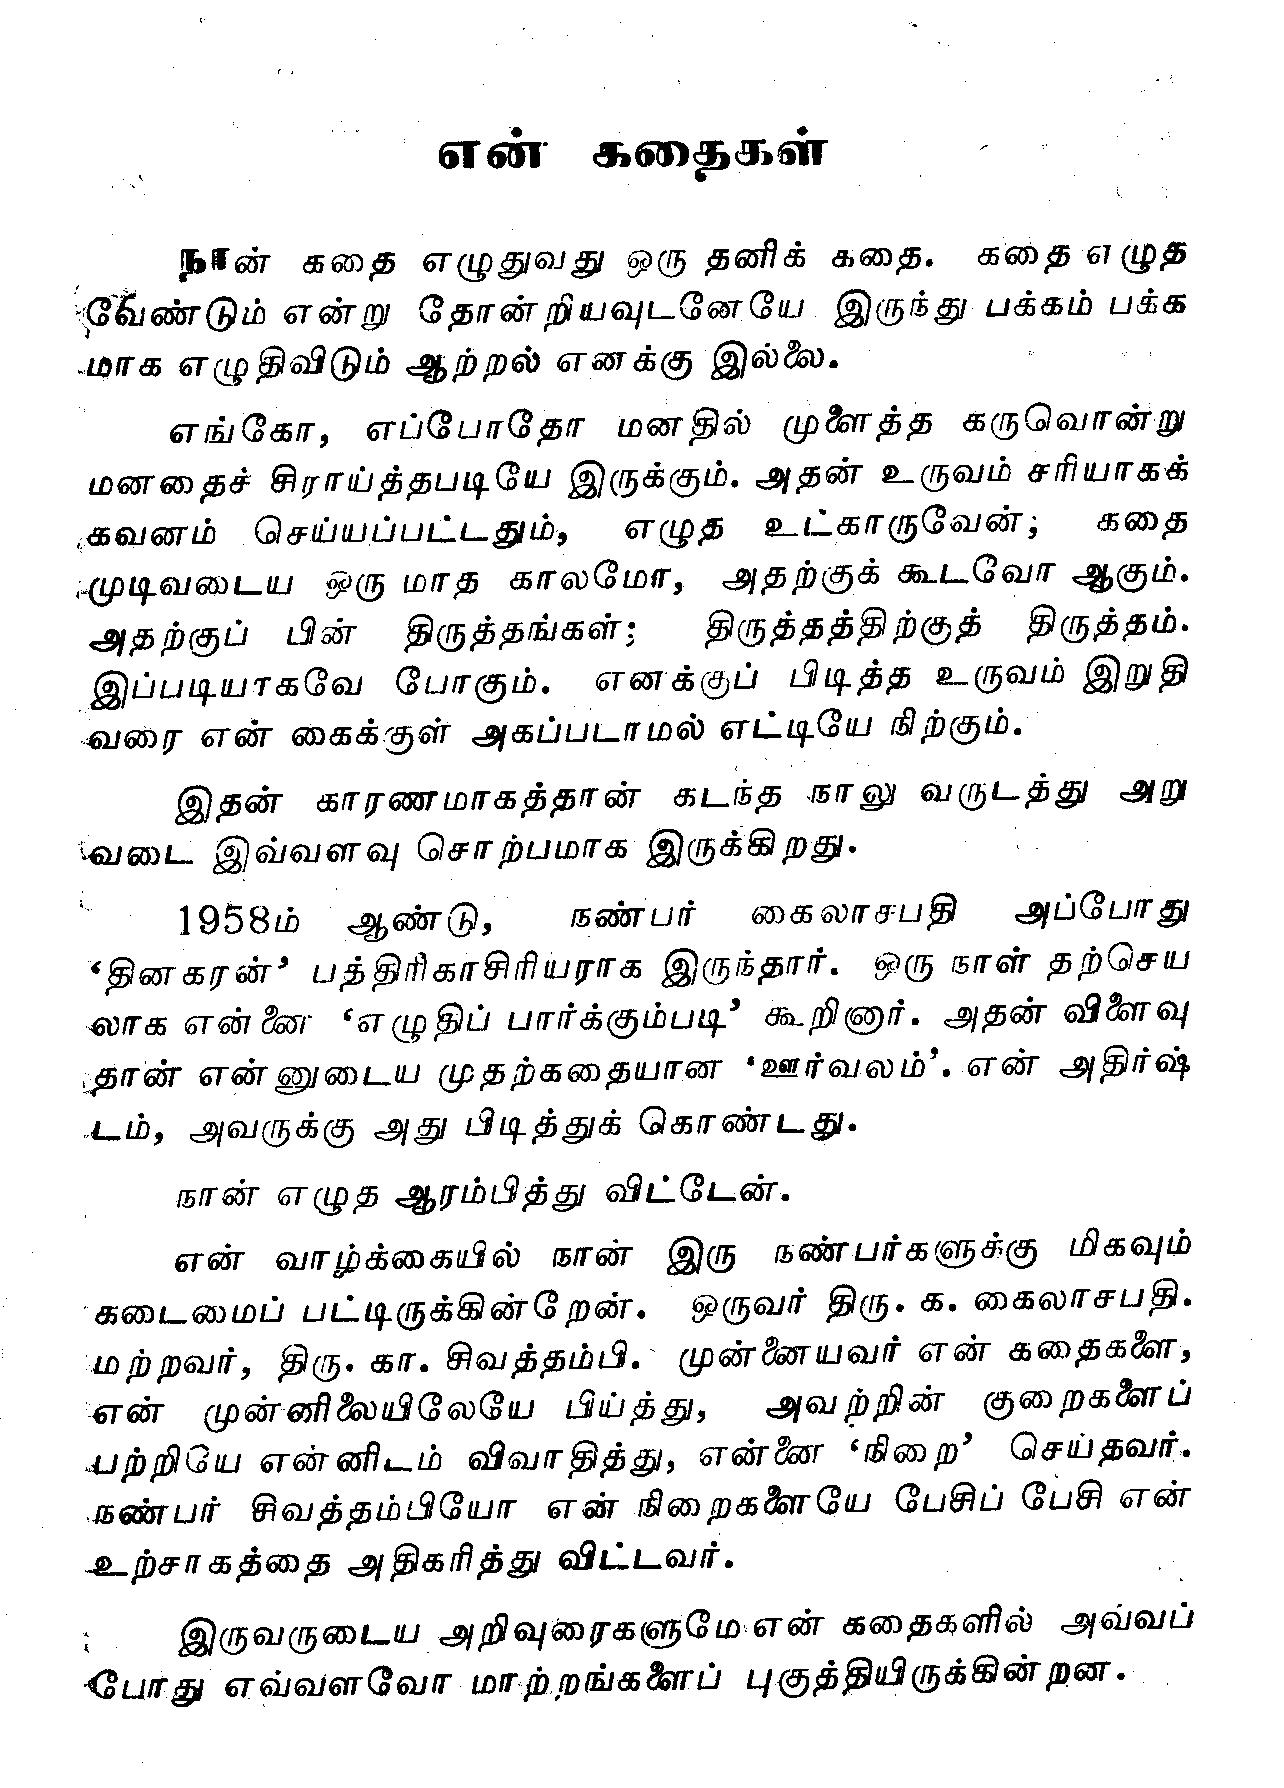 Tamil Dirty Stories In Tamil Language Pdf Download